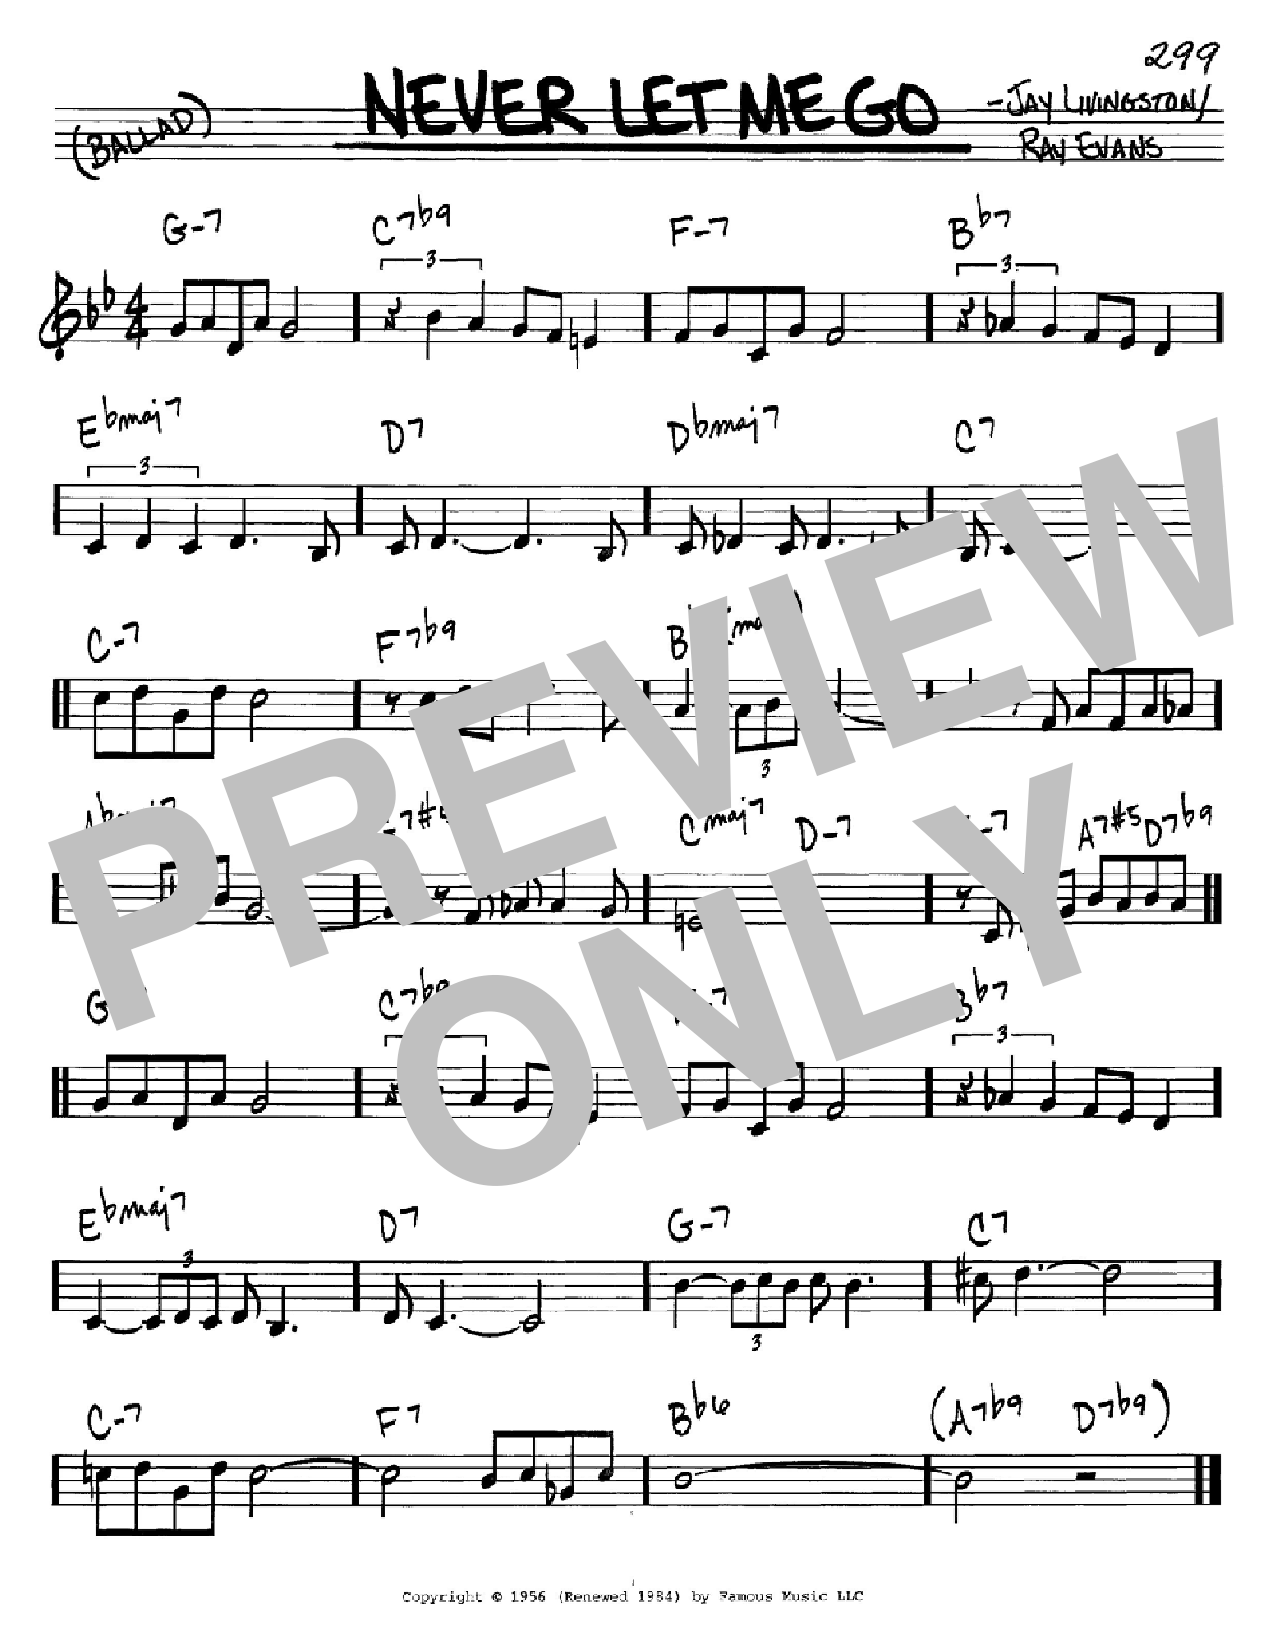 Dinah Washington Never Let Me Go Sheet Music Notes & Chords for Melody Line, Lyrics & Chords - Download or Print PDF